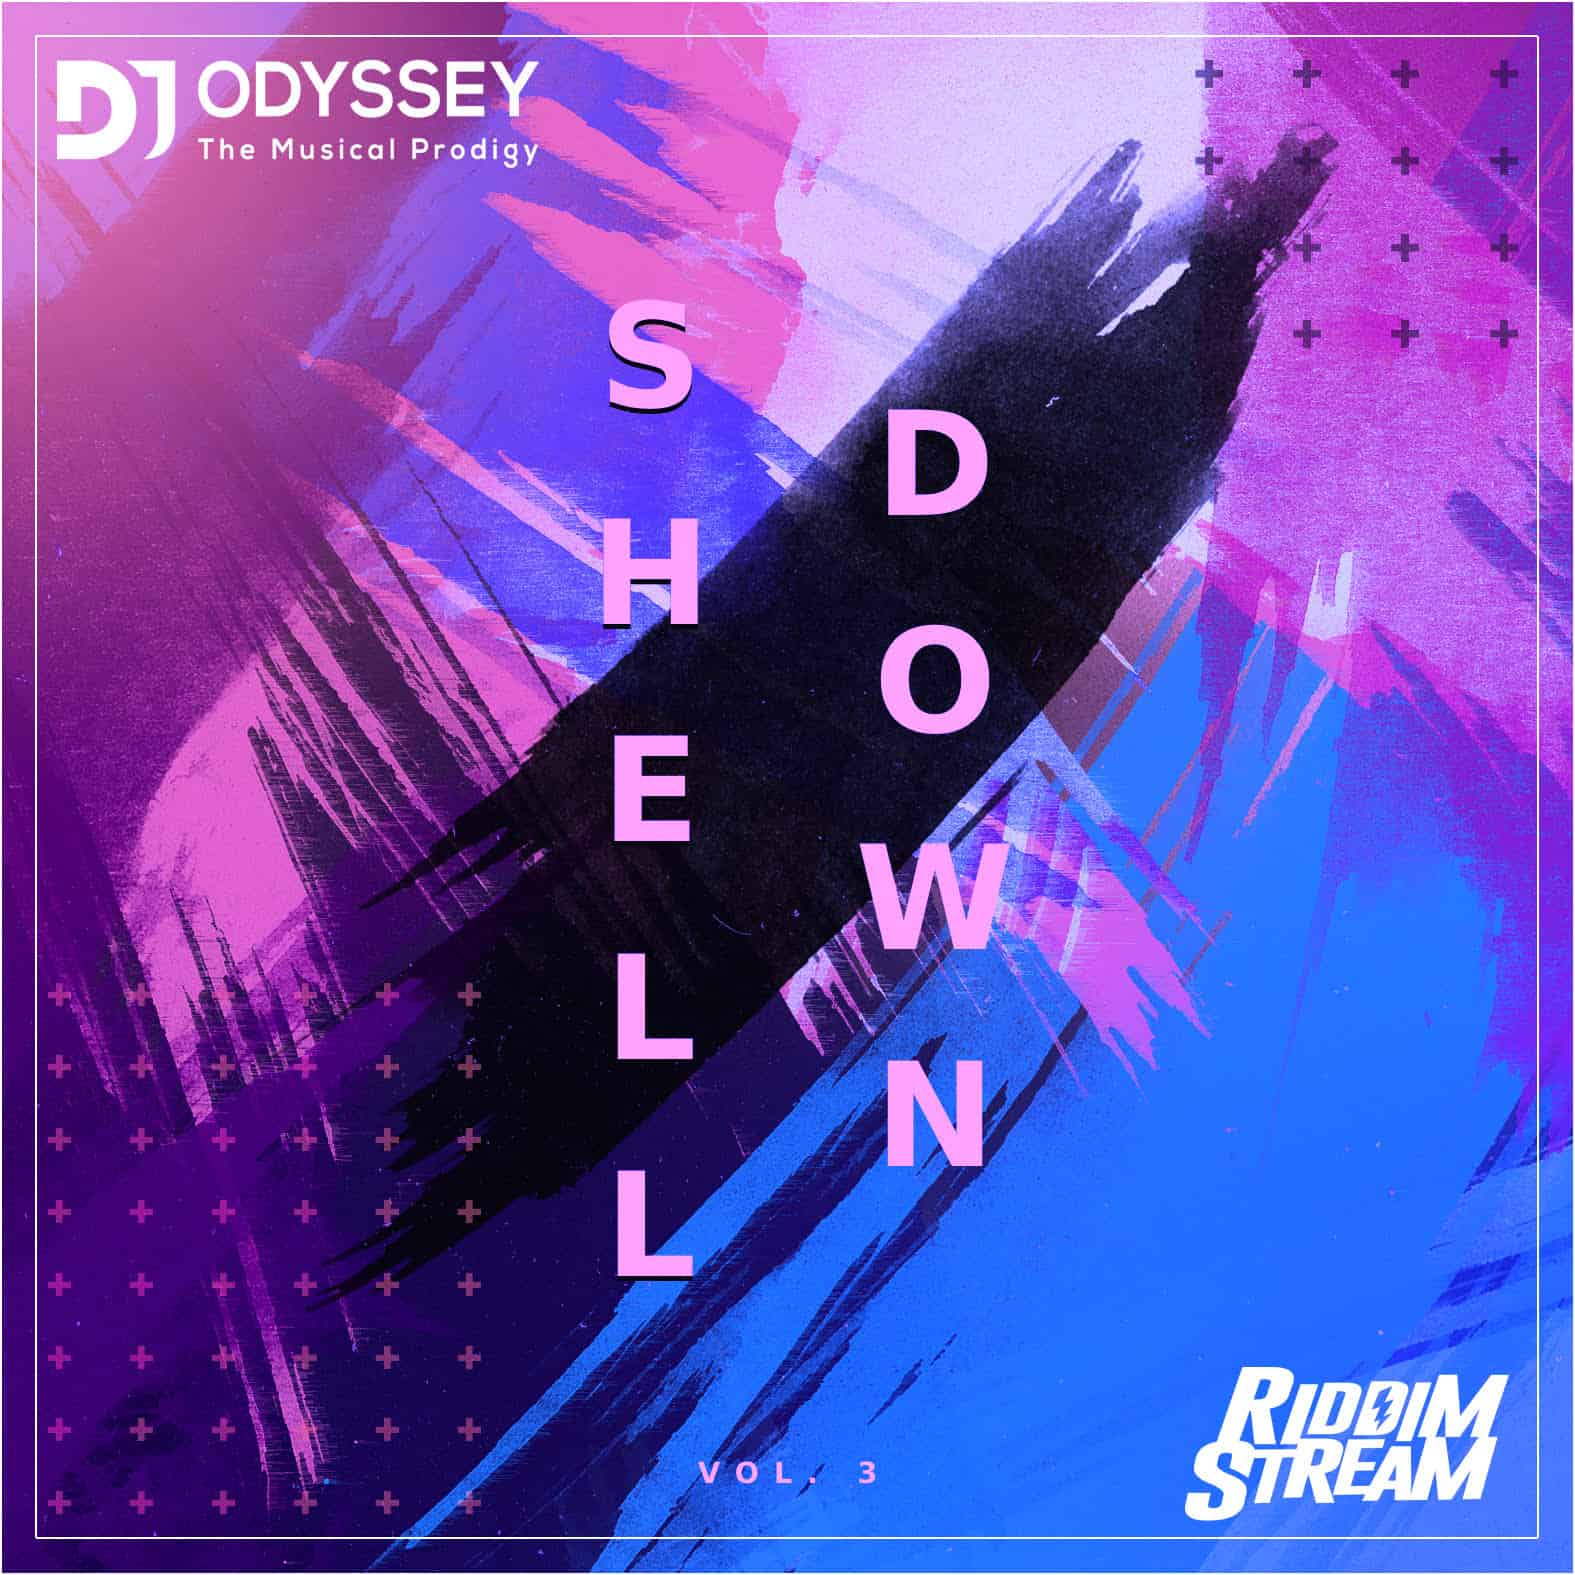 DJ Odyssey - Shell Down Vol. 3